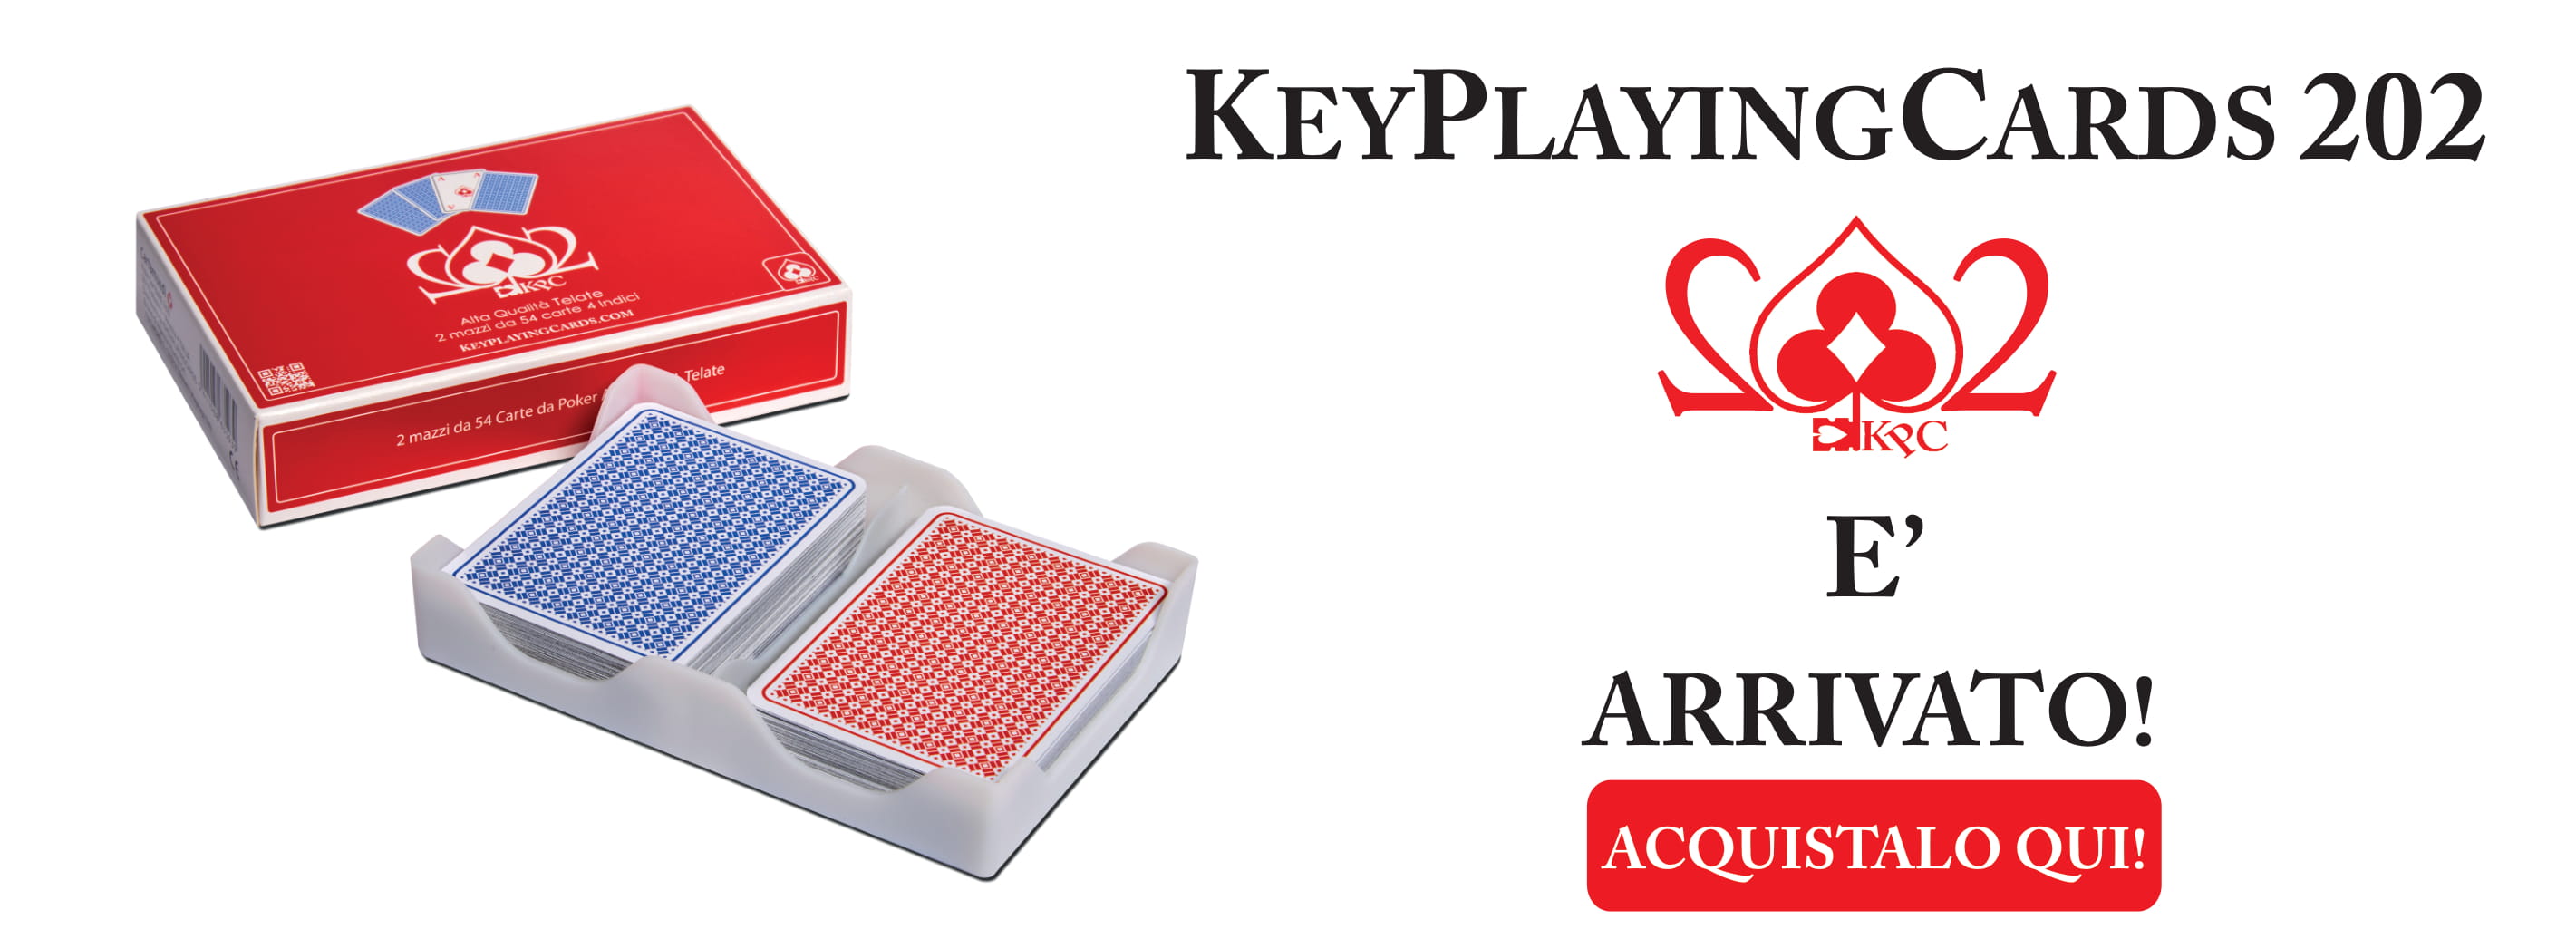 Keyplayingcards 202 - 5